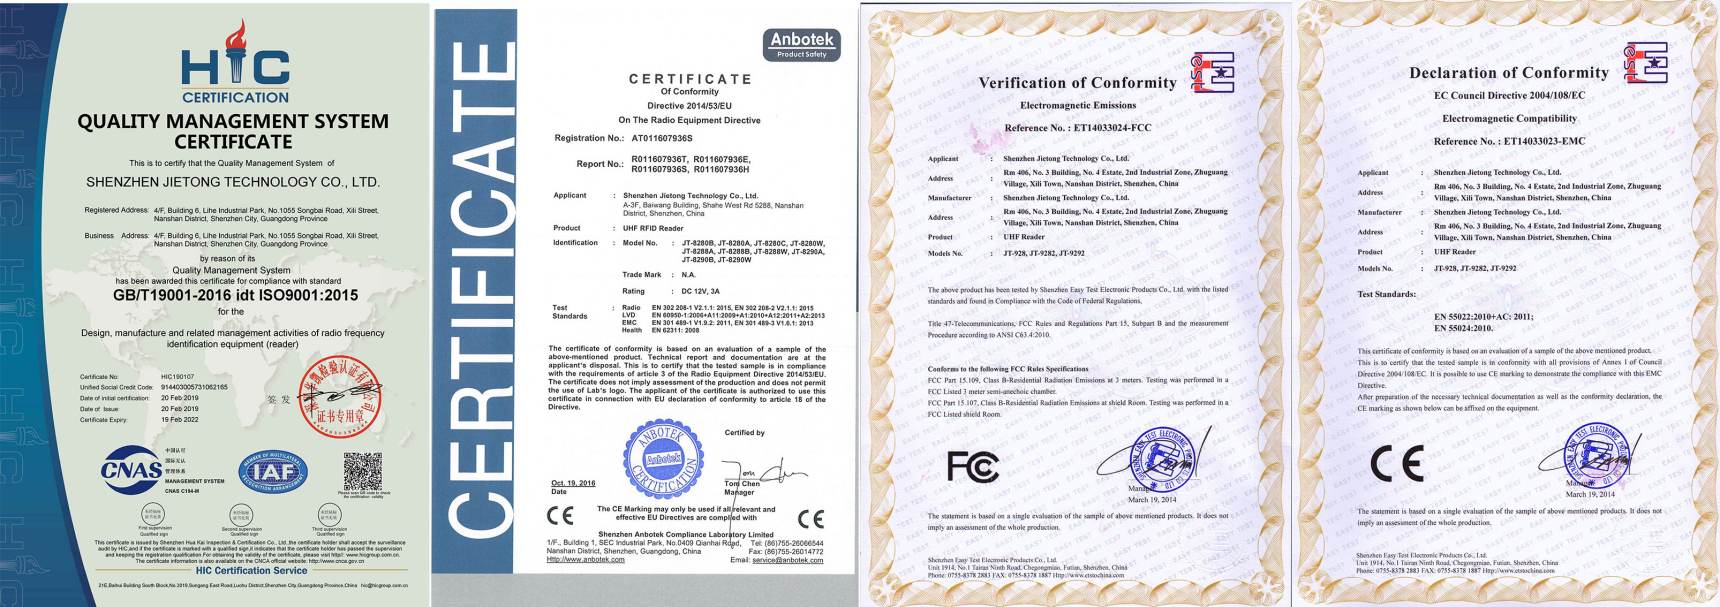 JT-7100 UHF RFID Industrial Grade Reader ISO 18000-6C Protocol Multi-tag RS232